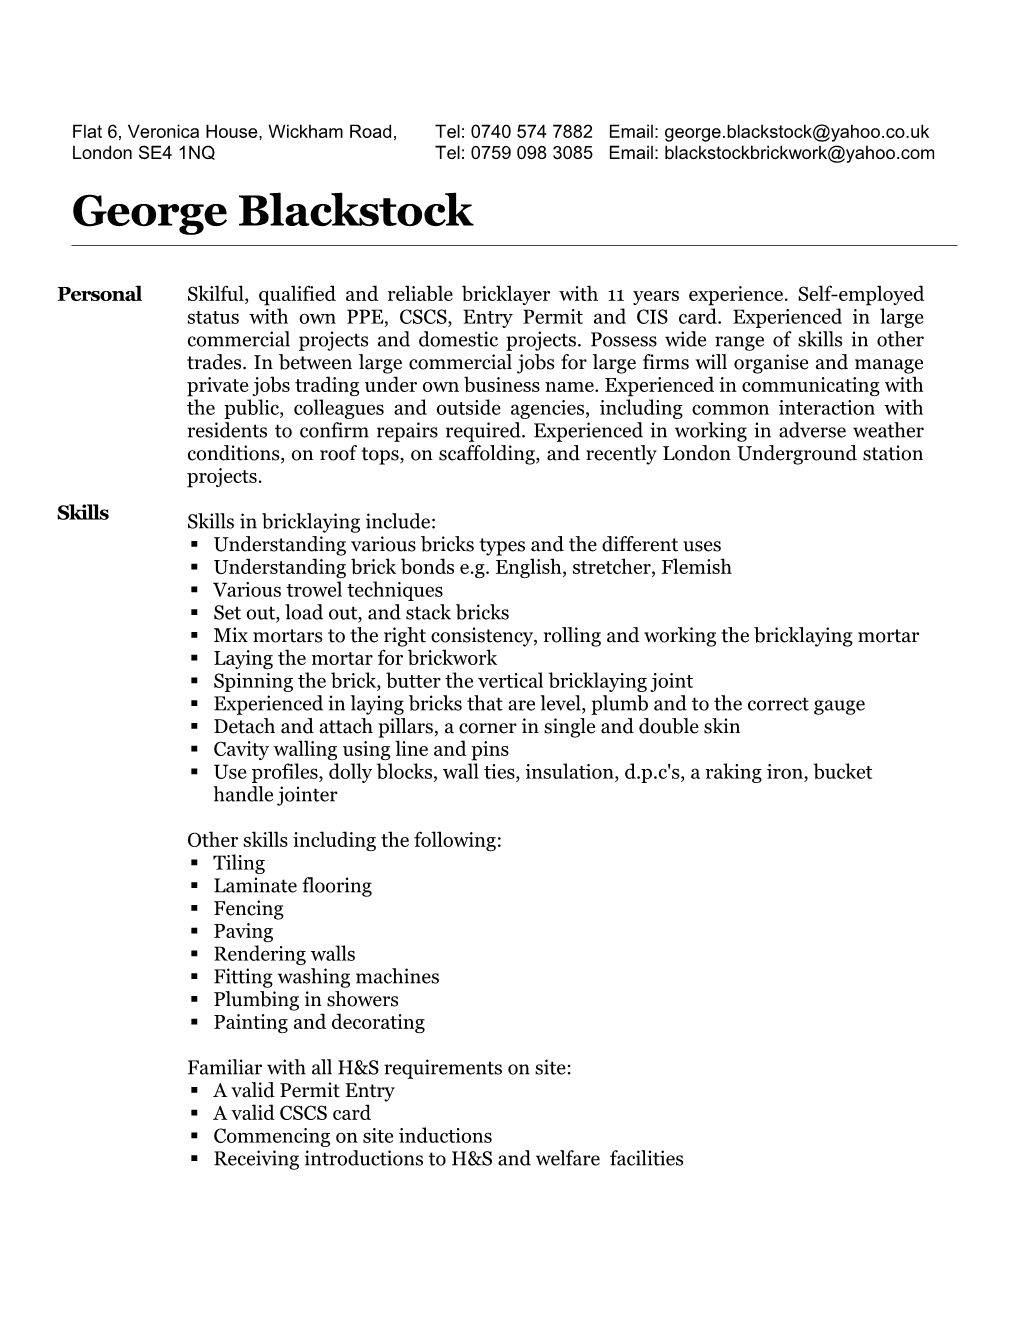 George Blackstock